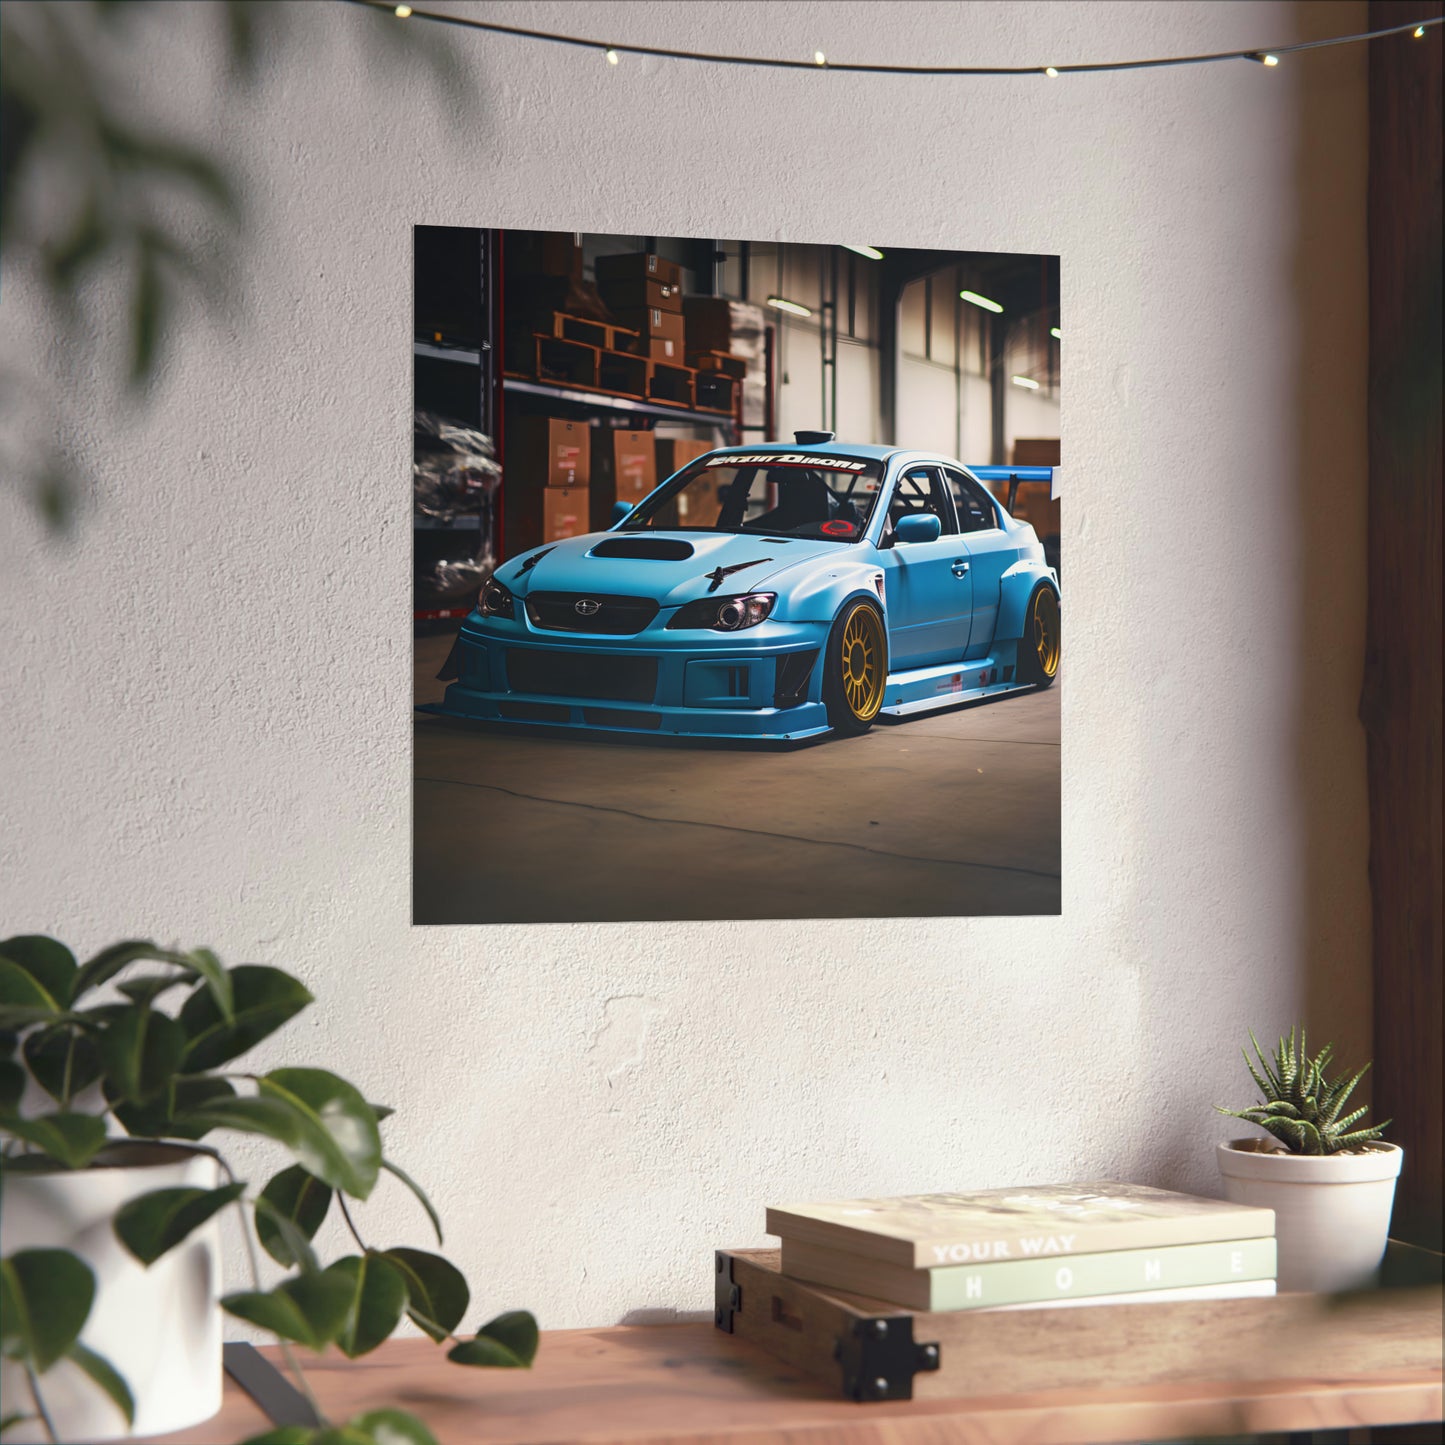 Stance Subaru STI Luxury Dream Car Wall Art Poster Print